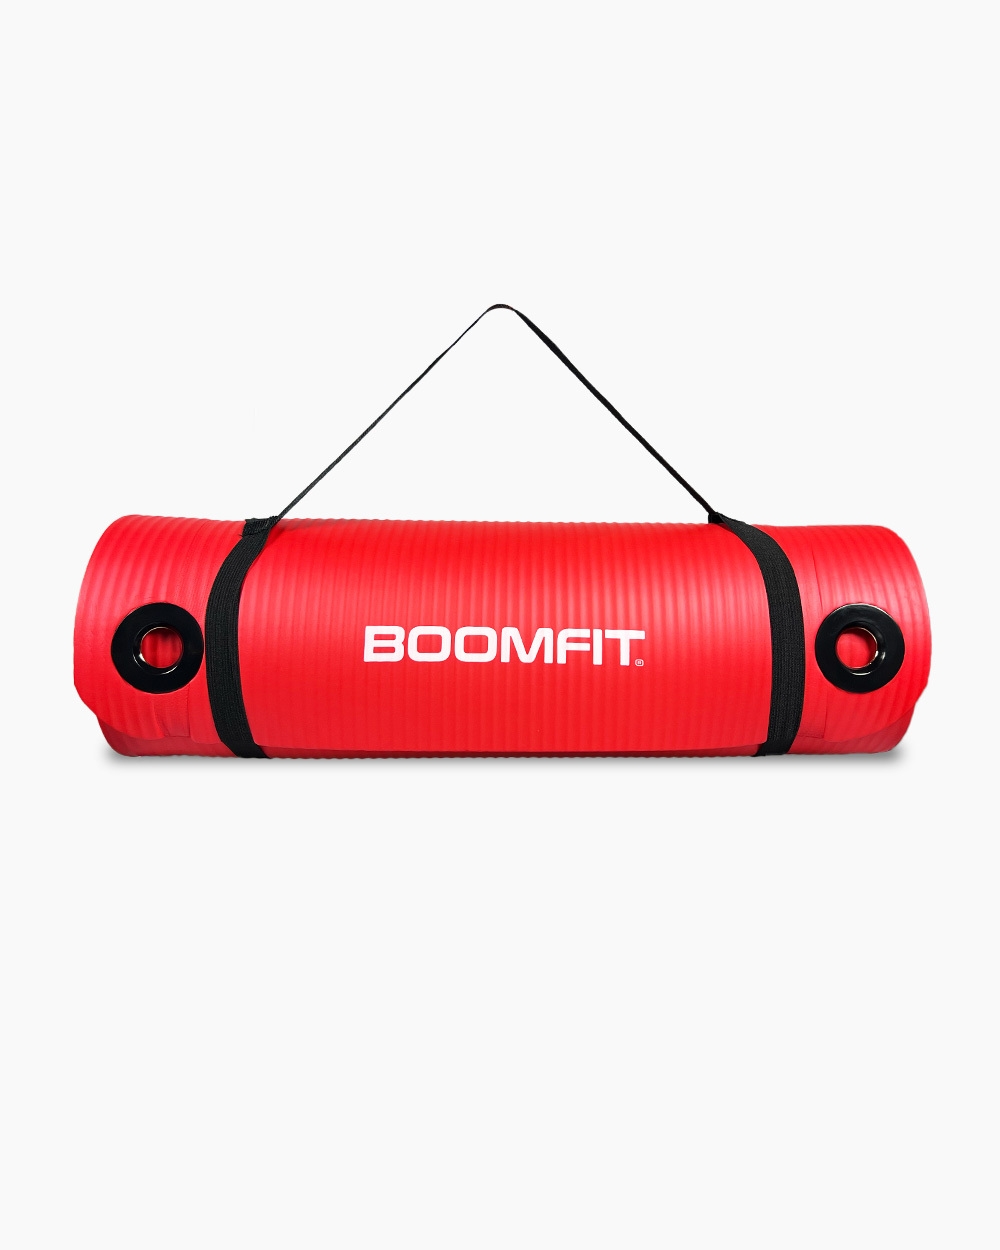 https://static-content-1.boomfit.com/24084-large_default/pilates-mat-nbr-15cm-red-boomfit.jpg